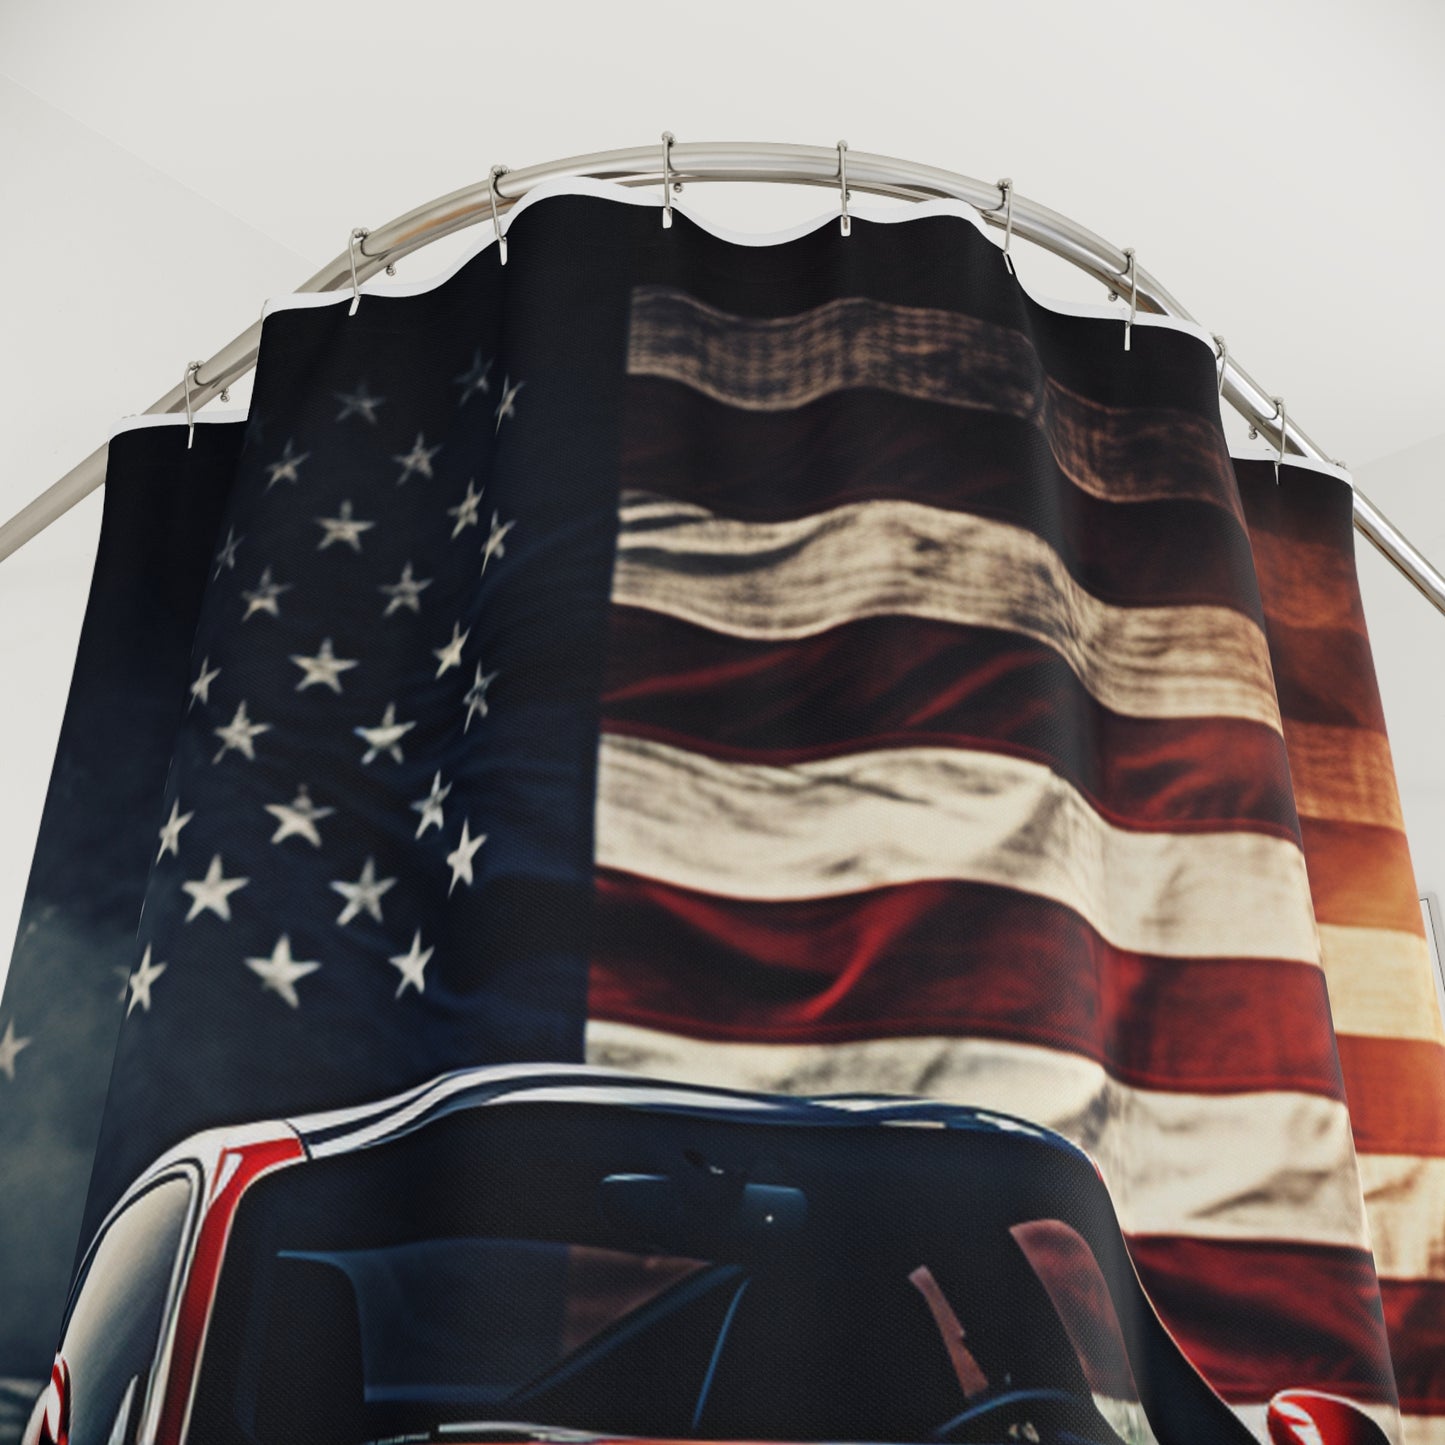 Polyester Shower Curtain American Flag Background Porsche 2